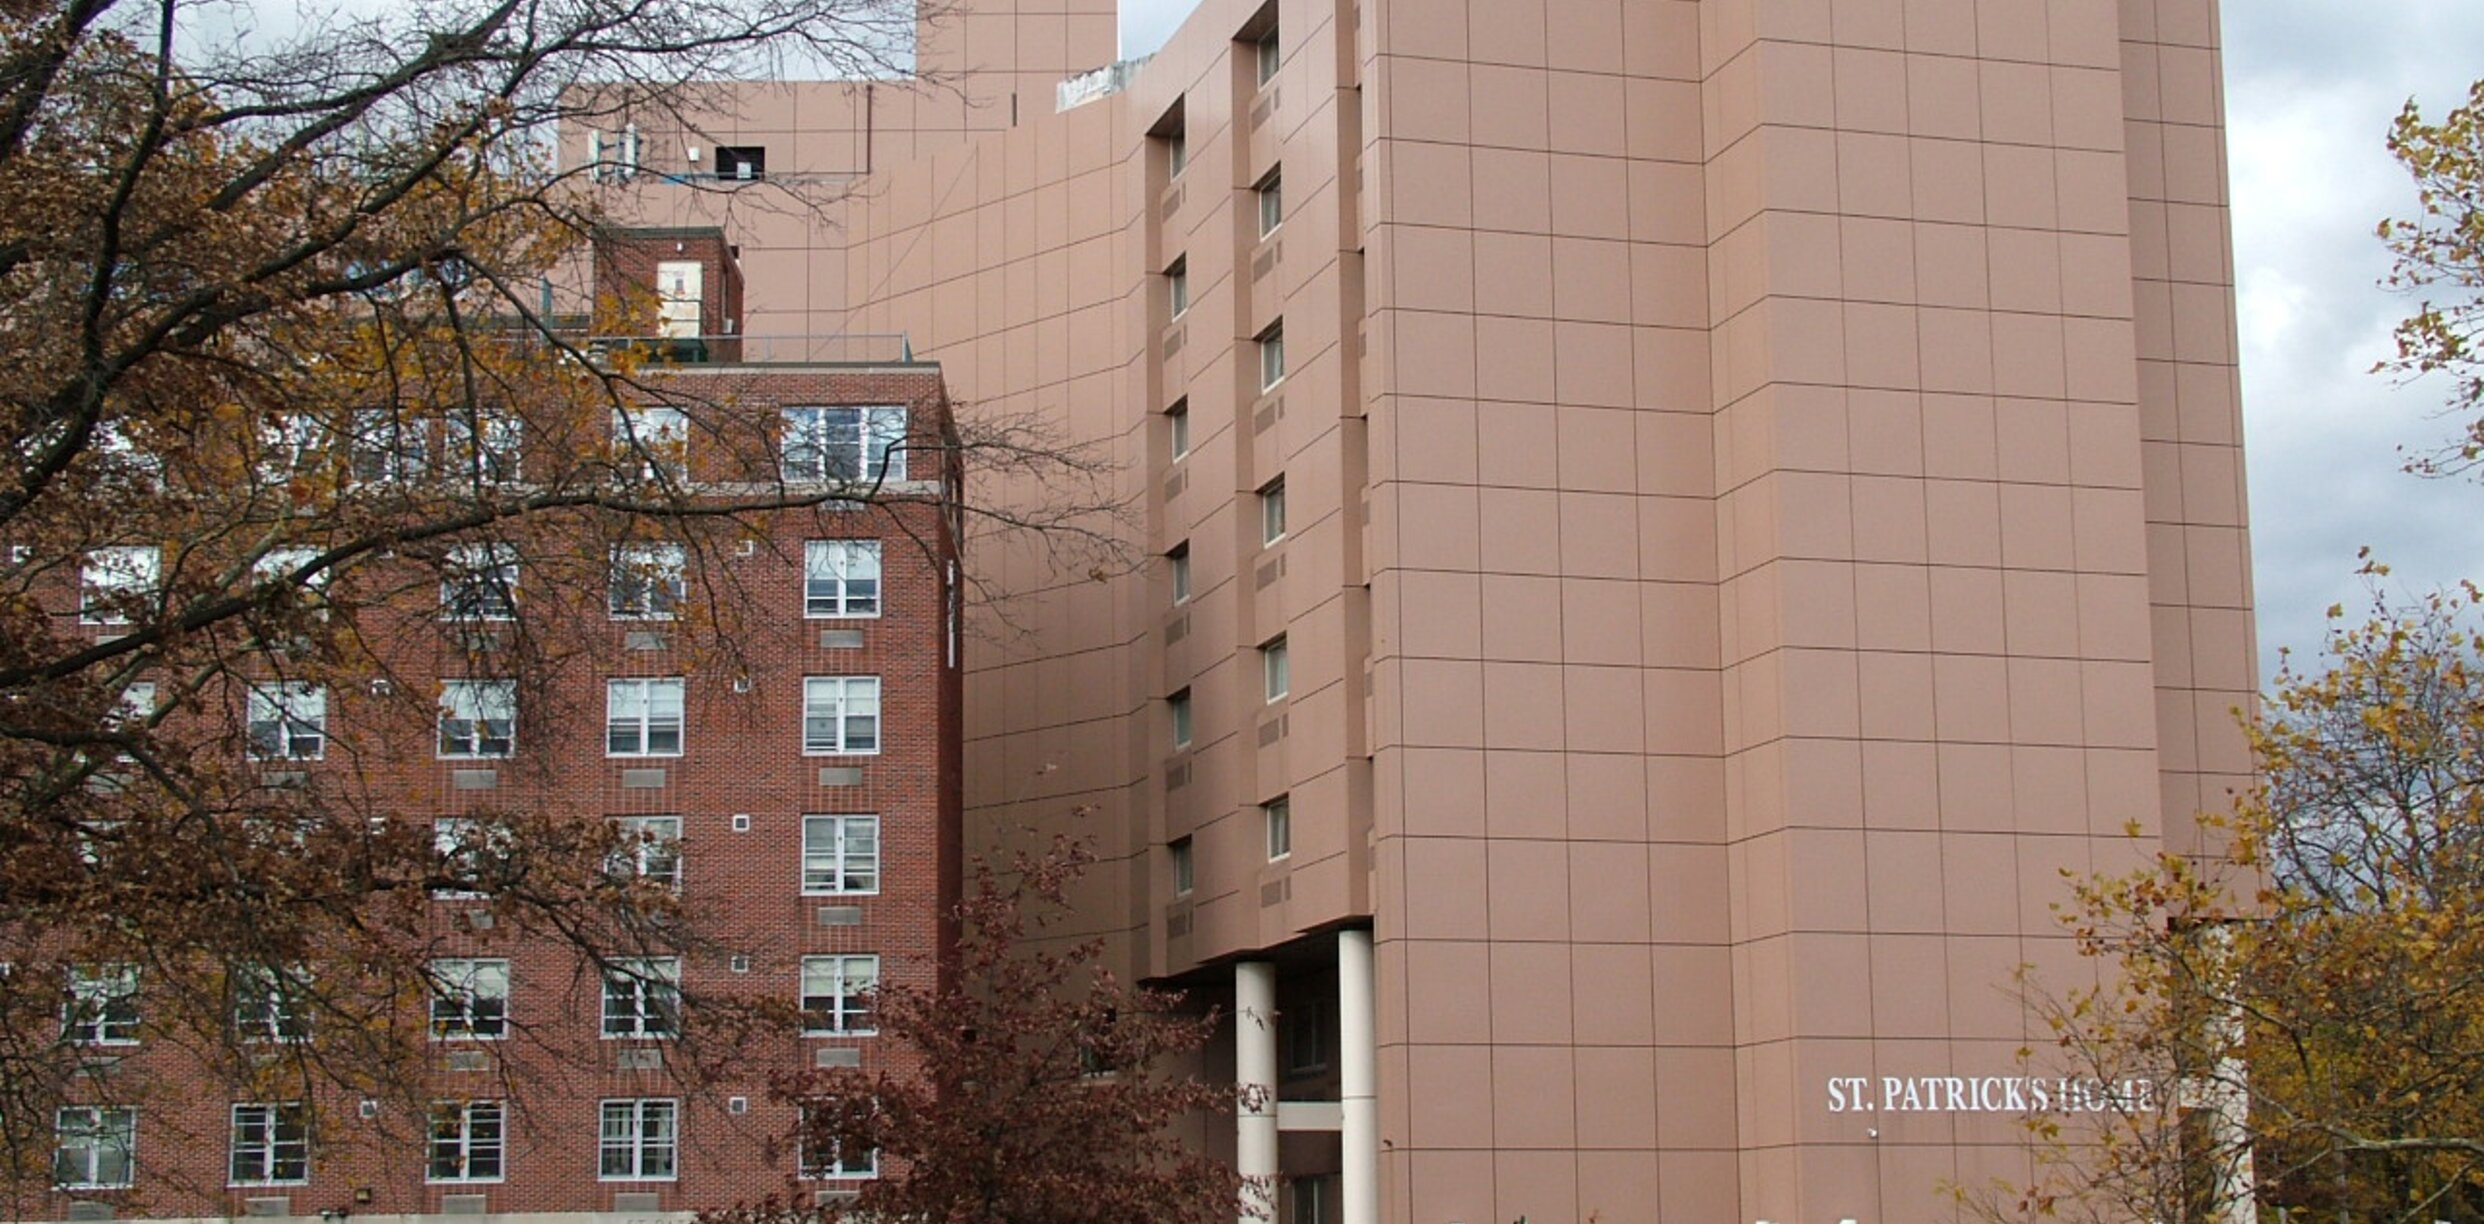 "St. Patrick's Home Rehabilitation and Health Care" facade cladding aluminium, New York City